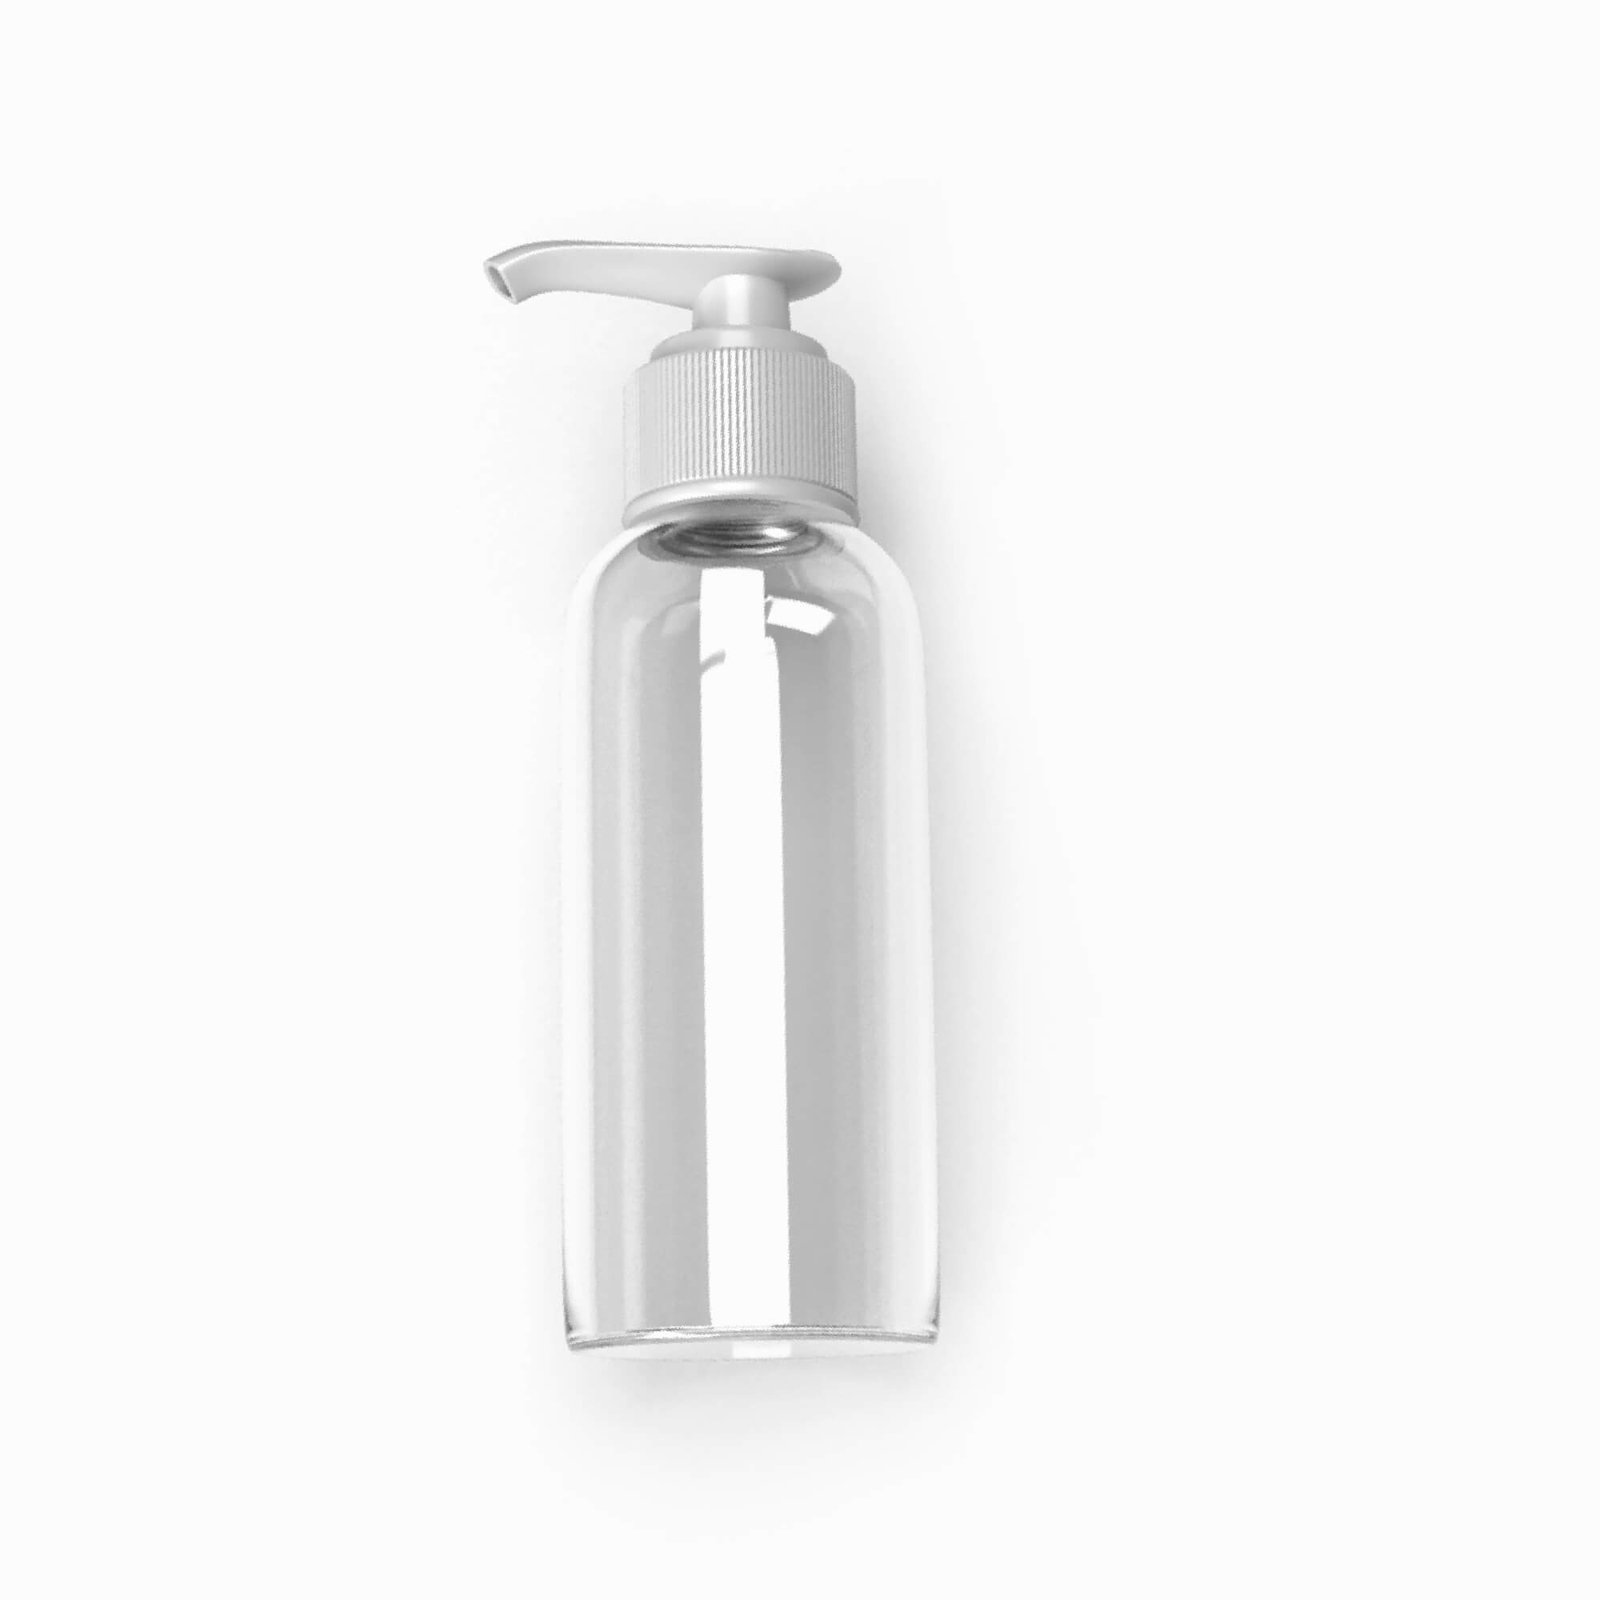 Blank Free Hand Sanitizer Bottle Mockup PSD Template (1)